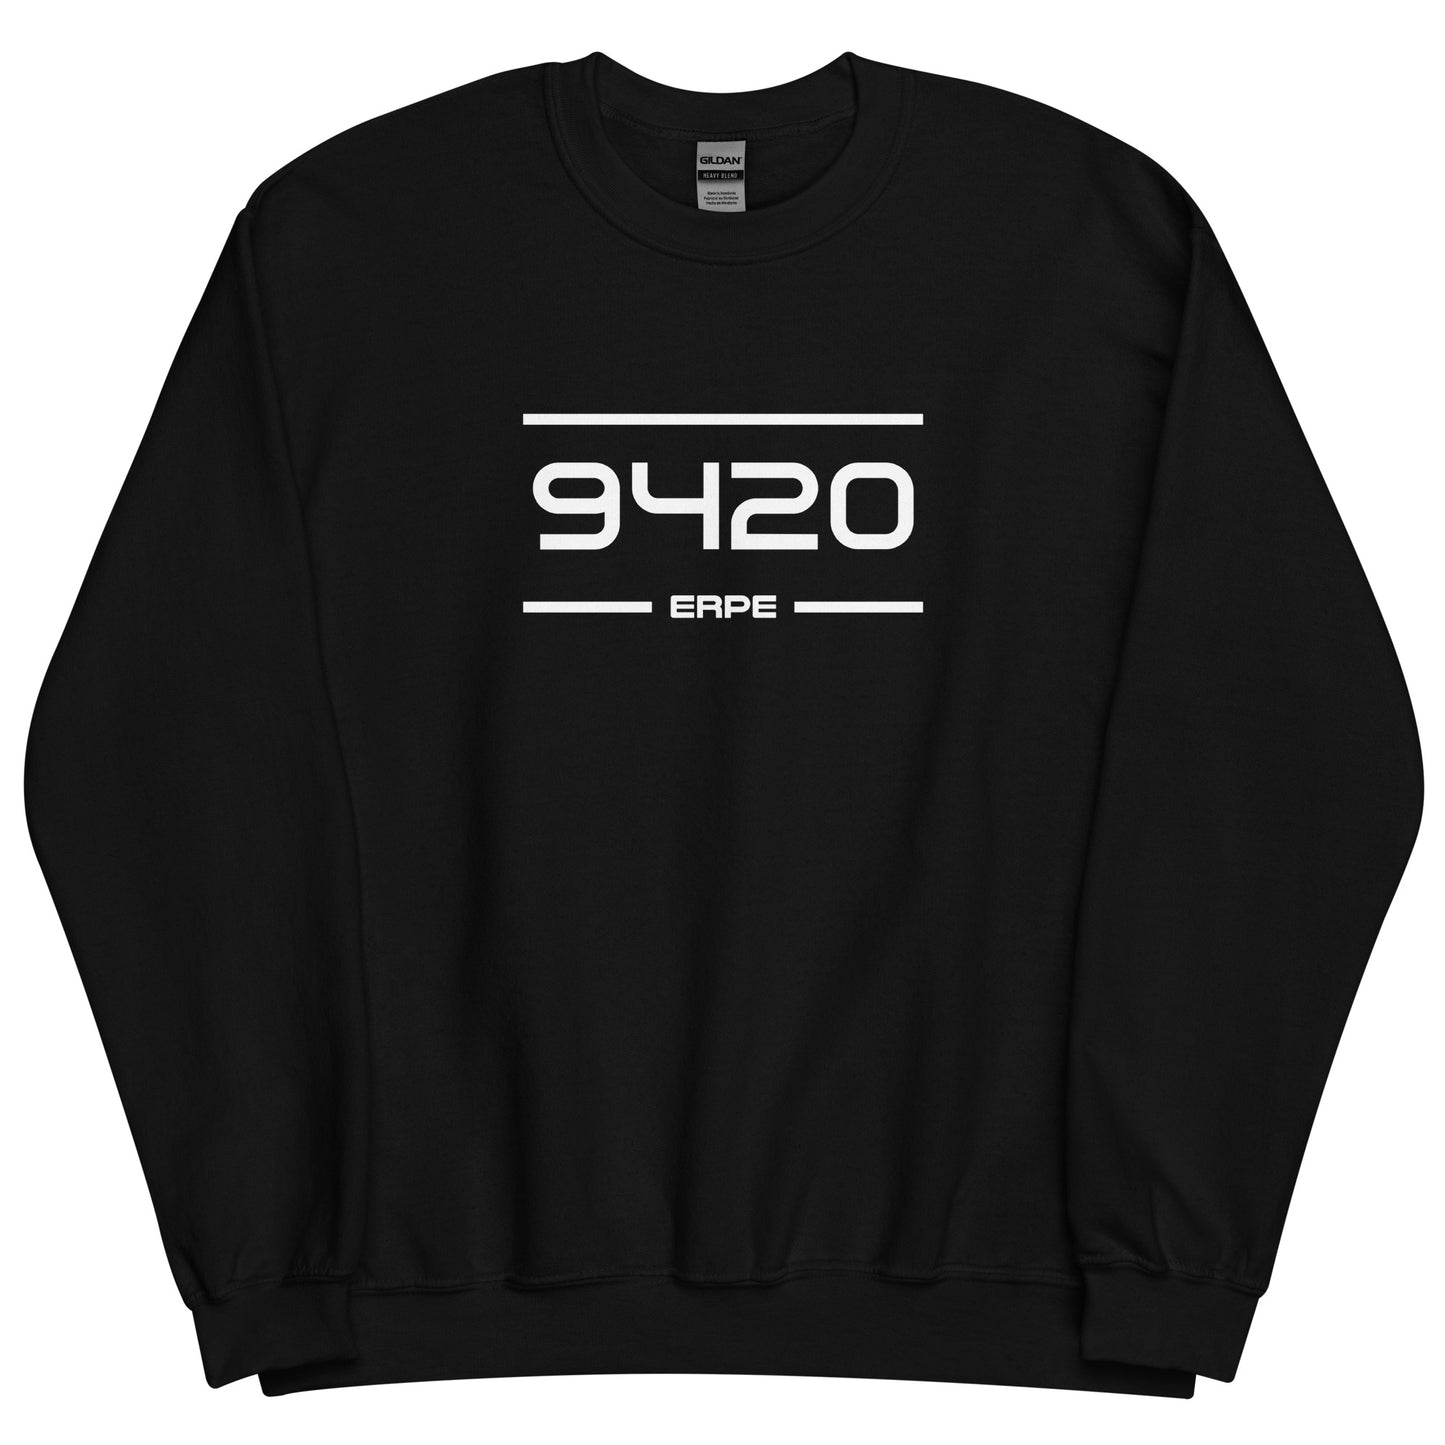 Sweater - 9420 - Erpe (M/V)